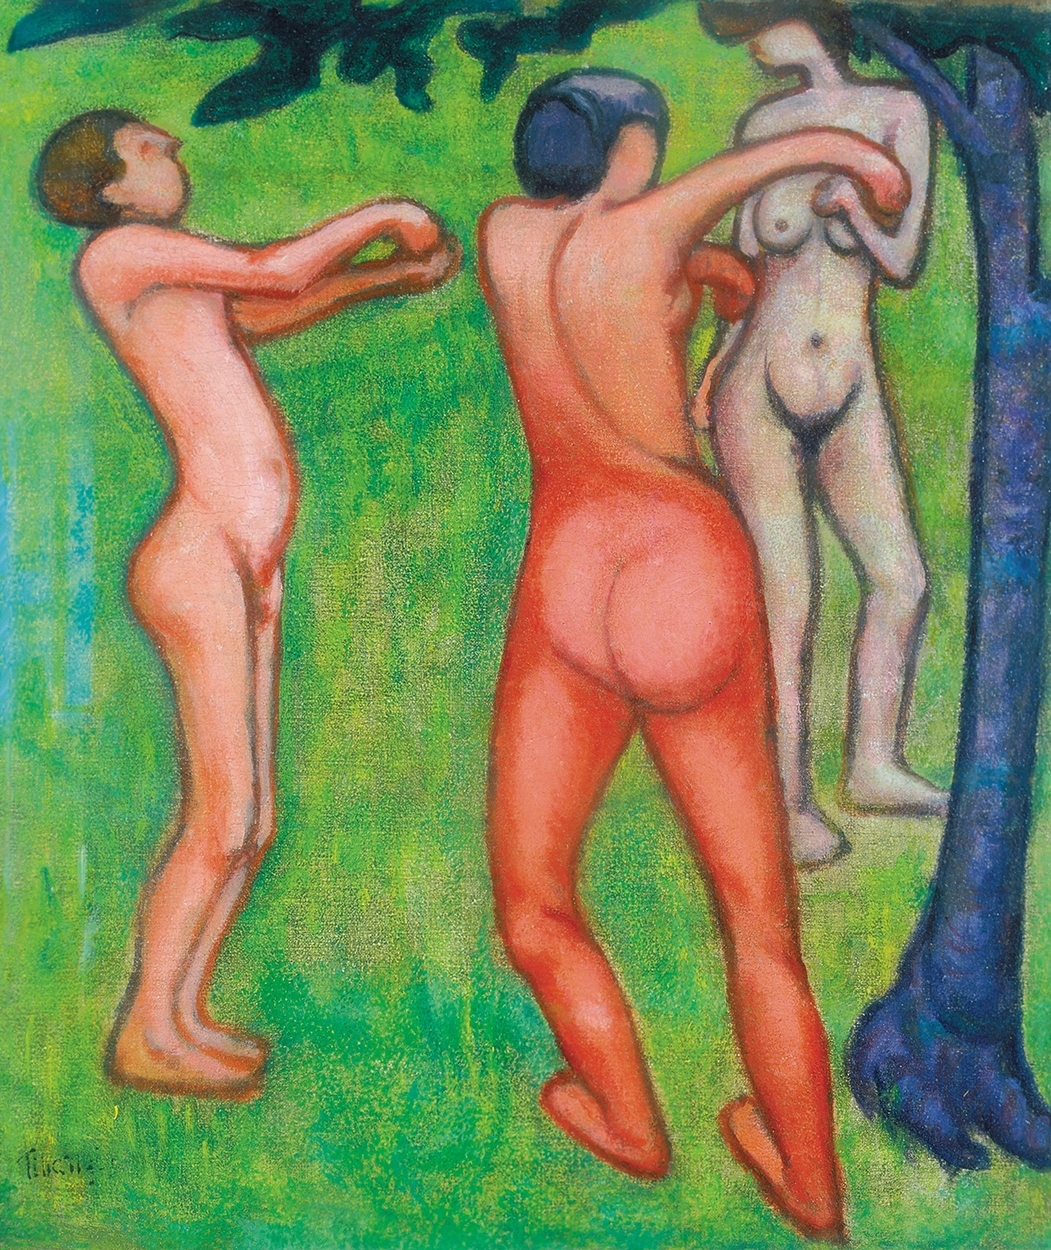 Tihanyi Lajos (1885-1938) Nudes (Nudes Outside, Dancing Nudes), around 1907